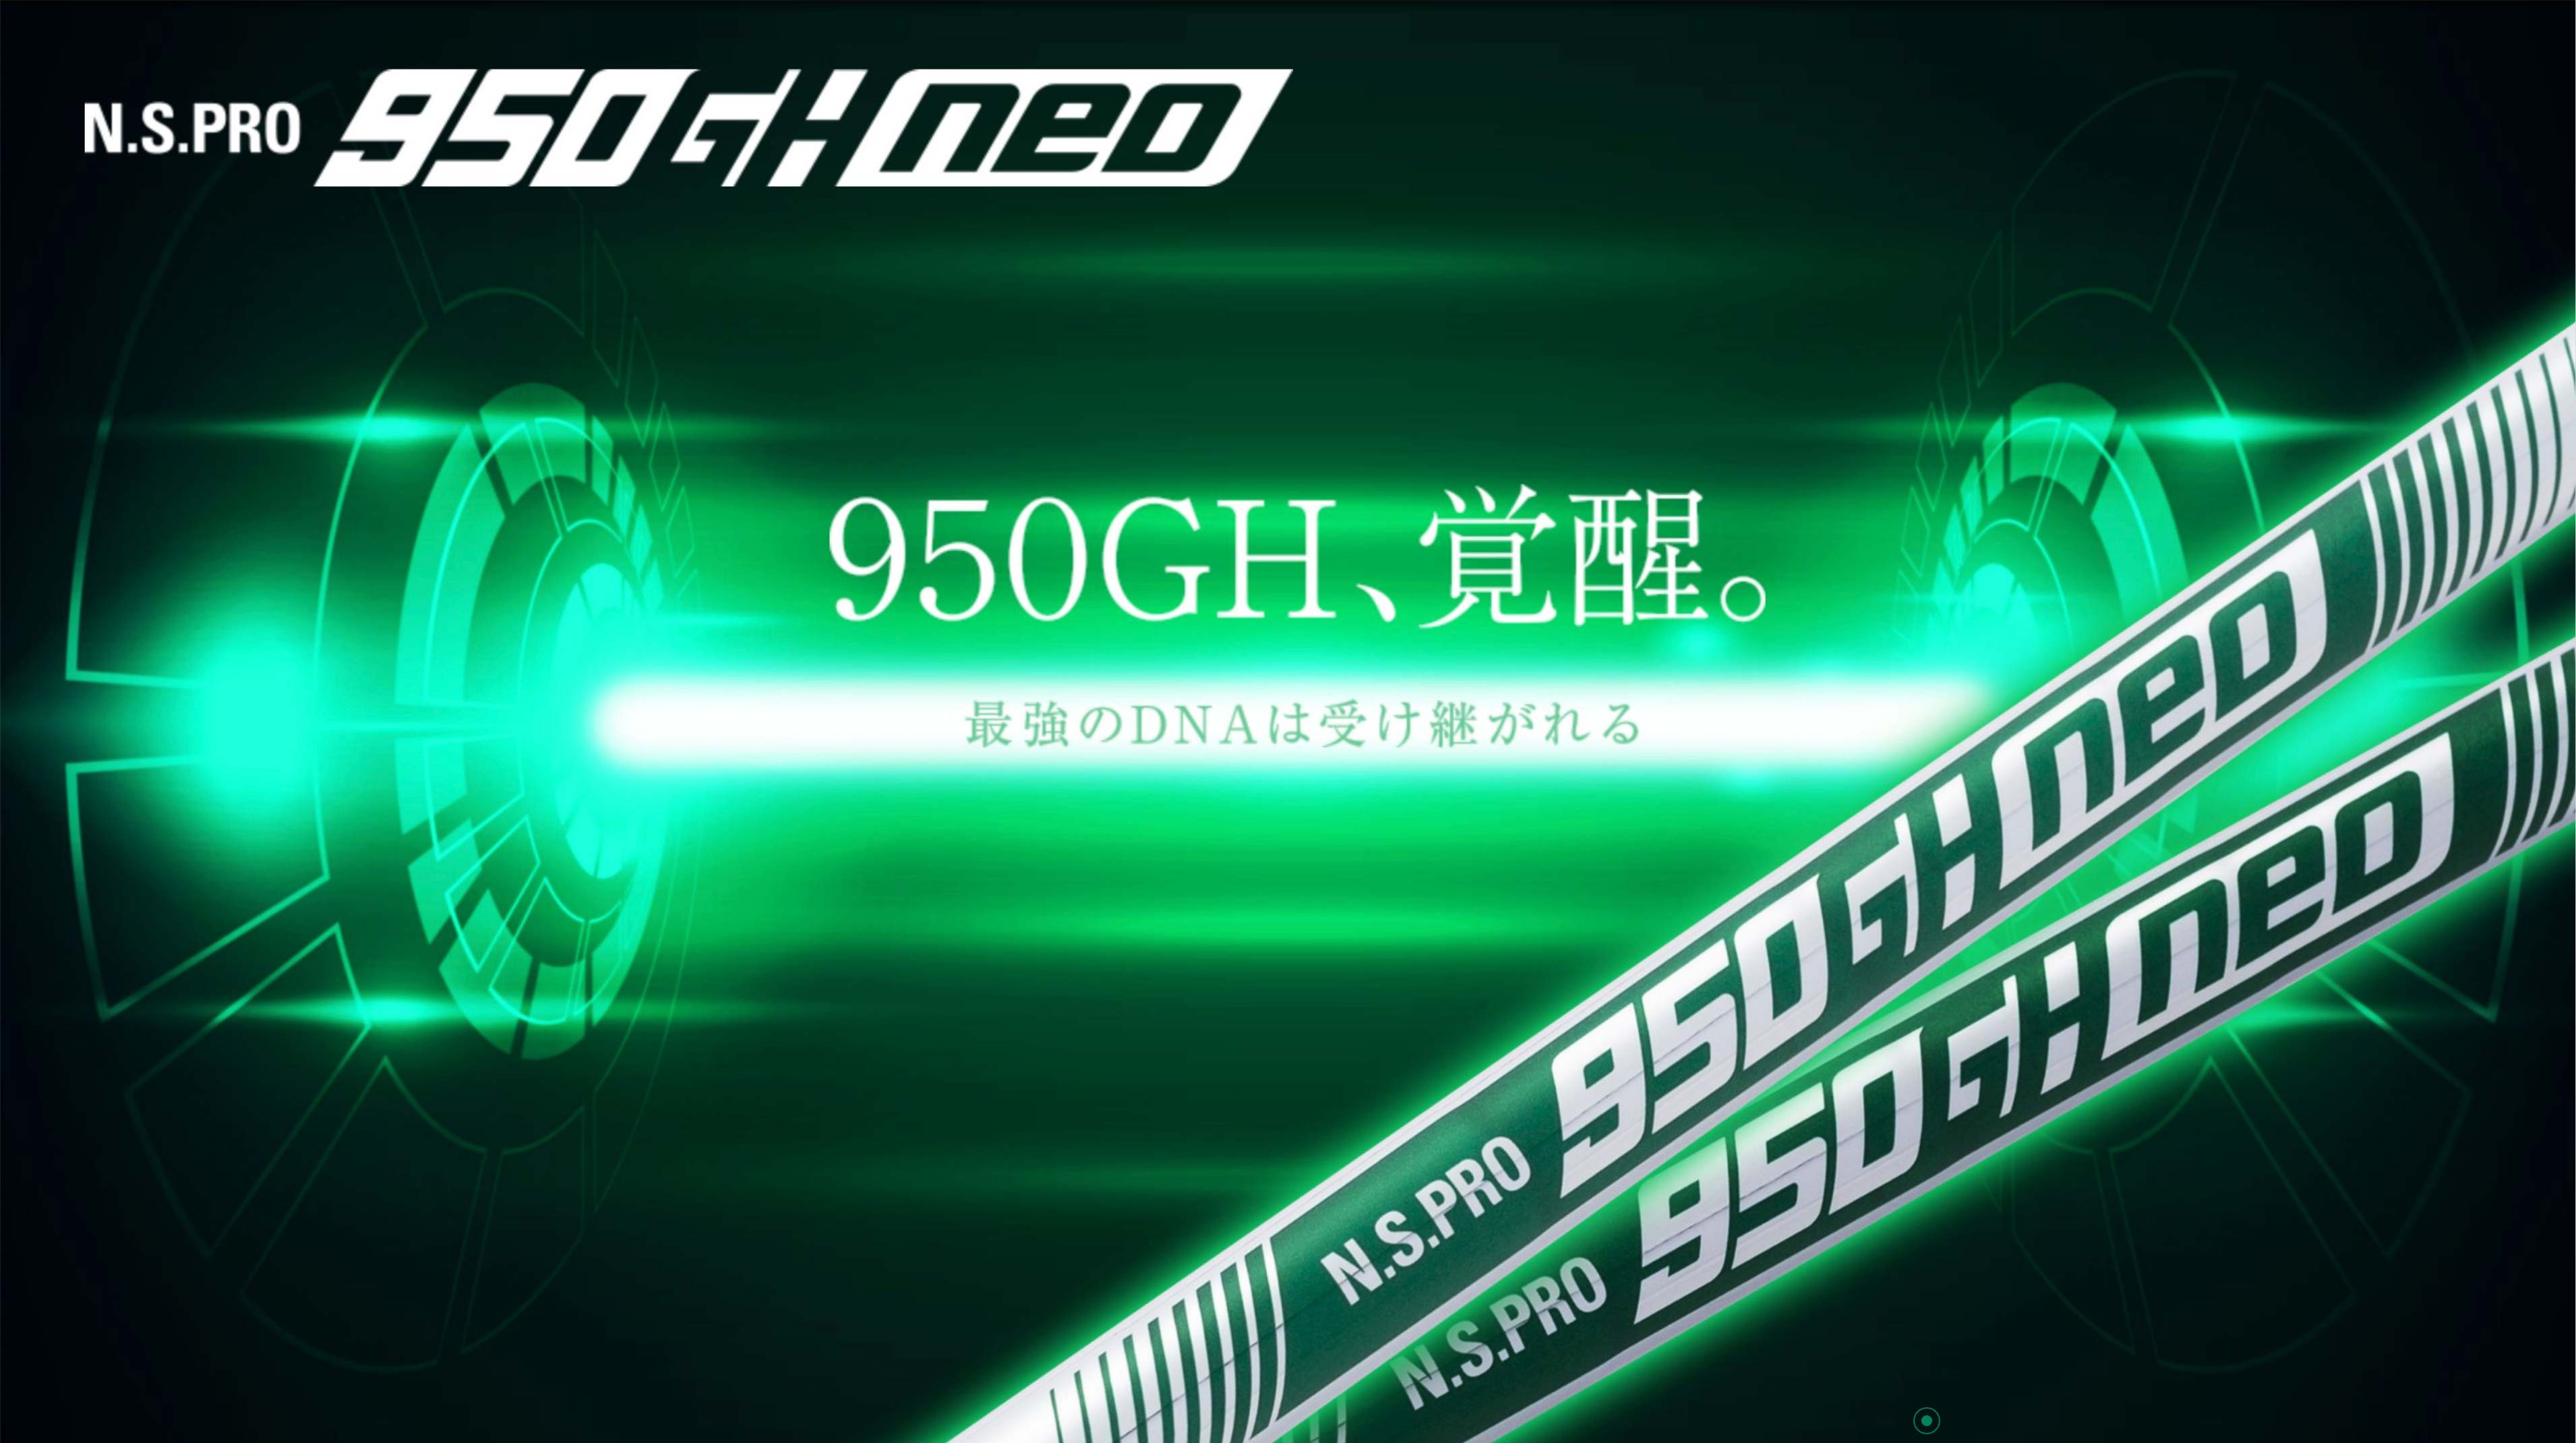 950GH neo - 日本シャフト｜N.S.PRO